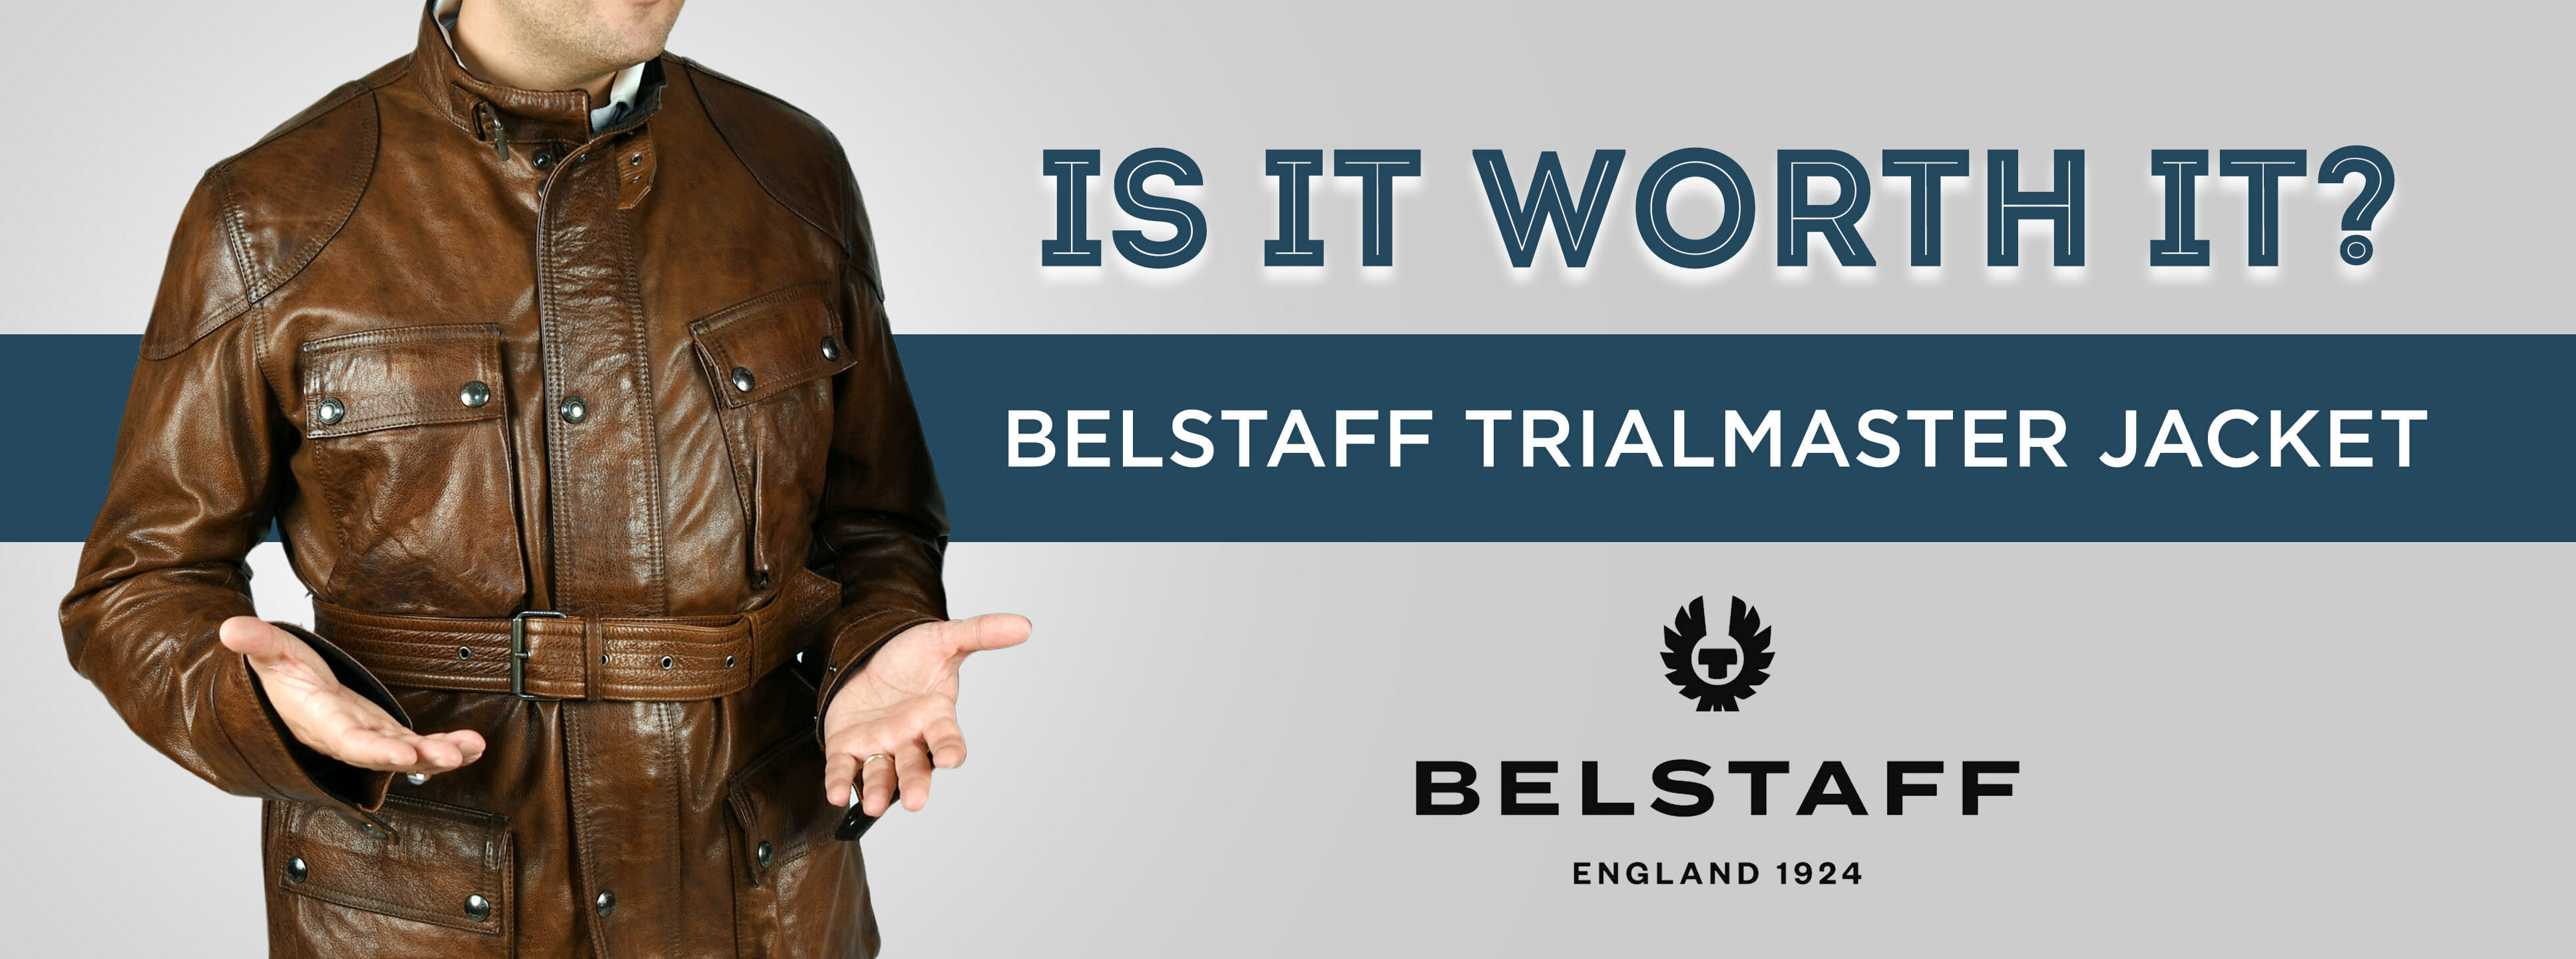 Belstaff Trialmaster Jacket Is It, Is Usa Leather Jackets Legit